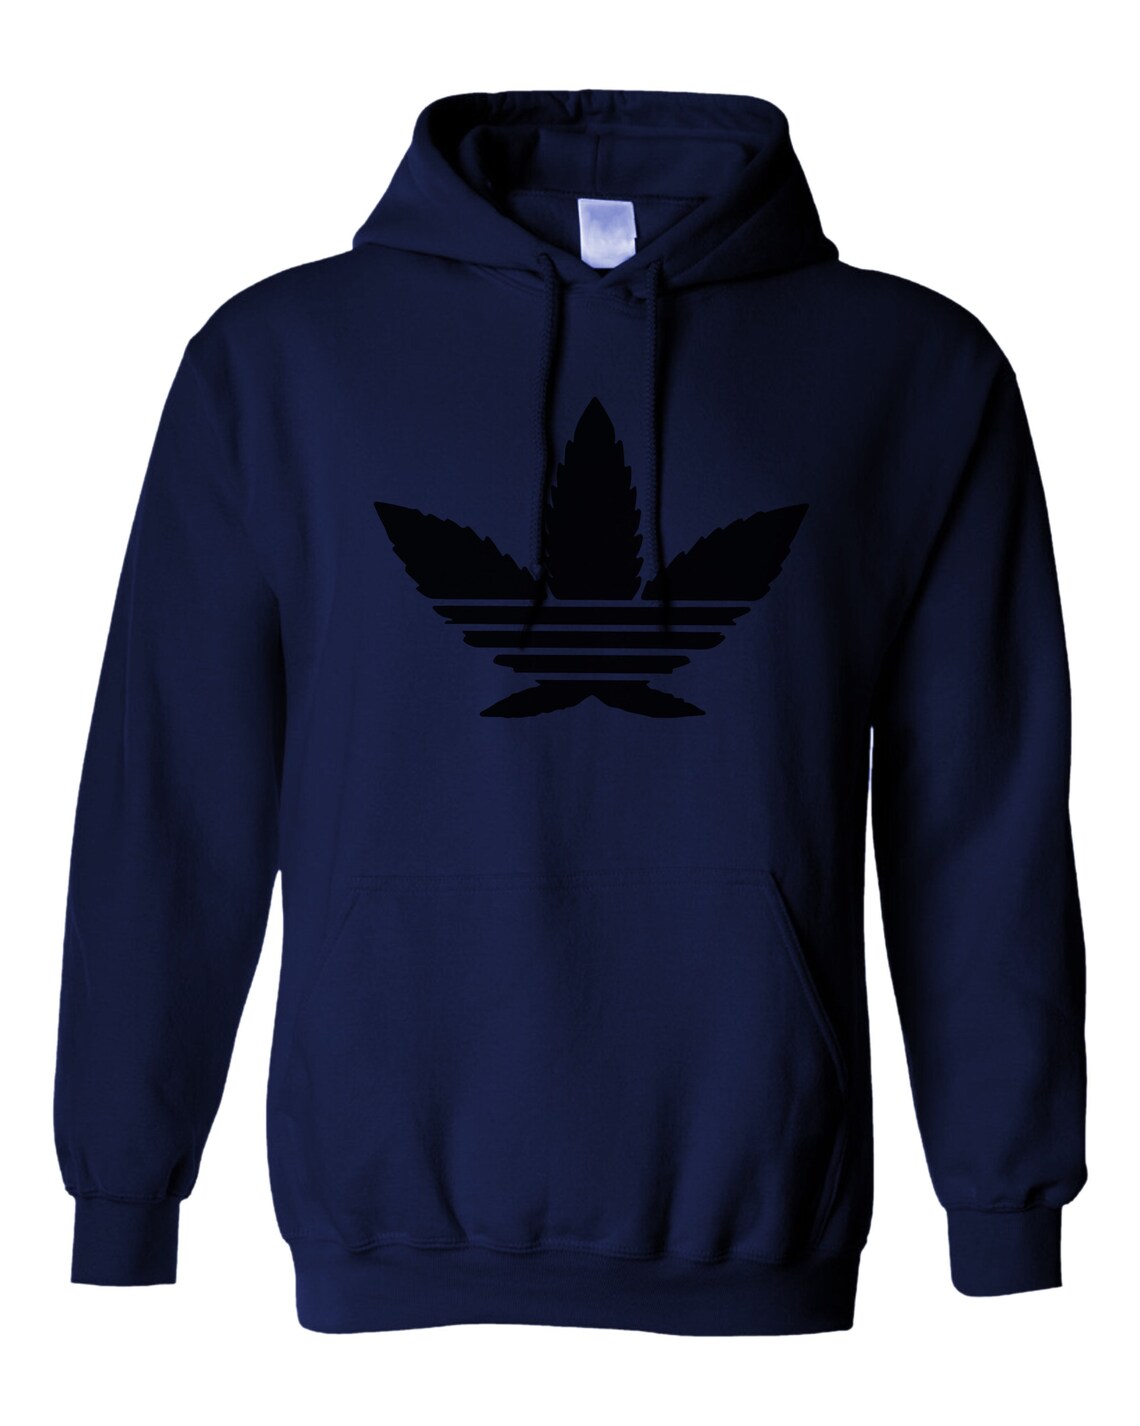 Weed pot leaf adidas hoodie smoke legalize it dope | Etsy